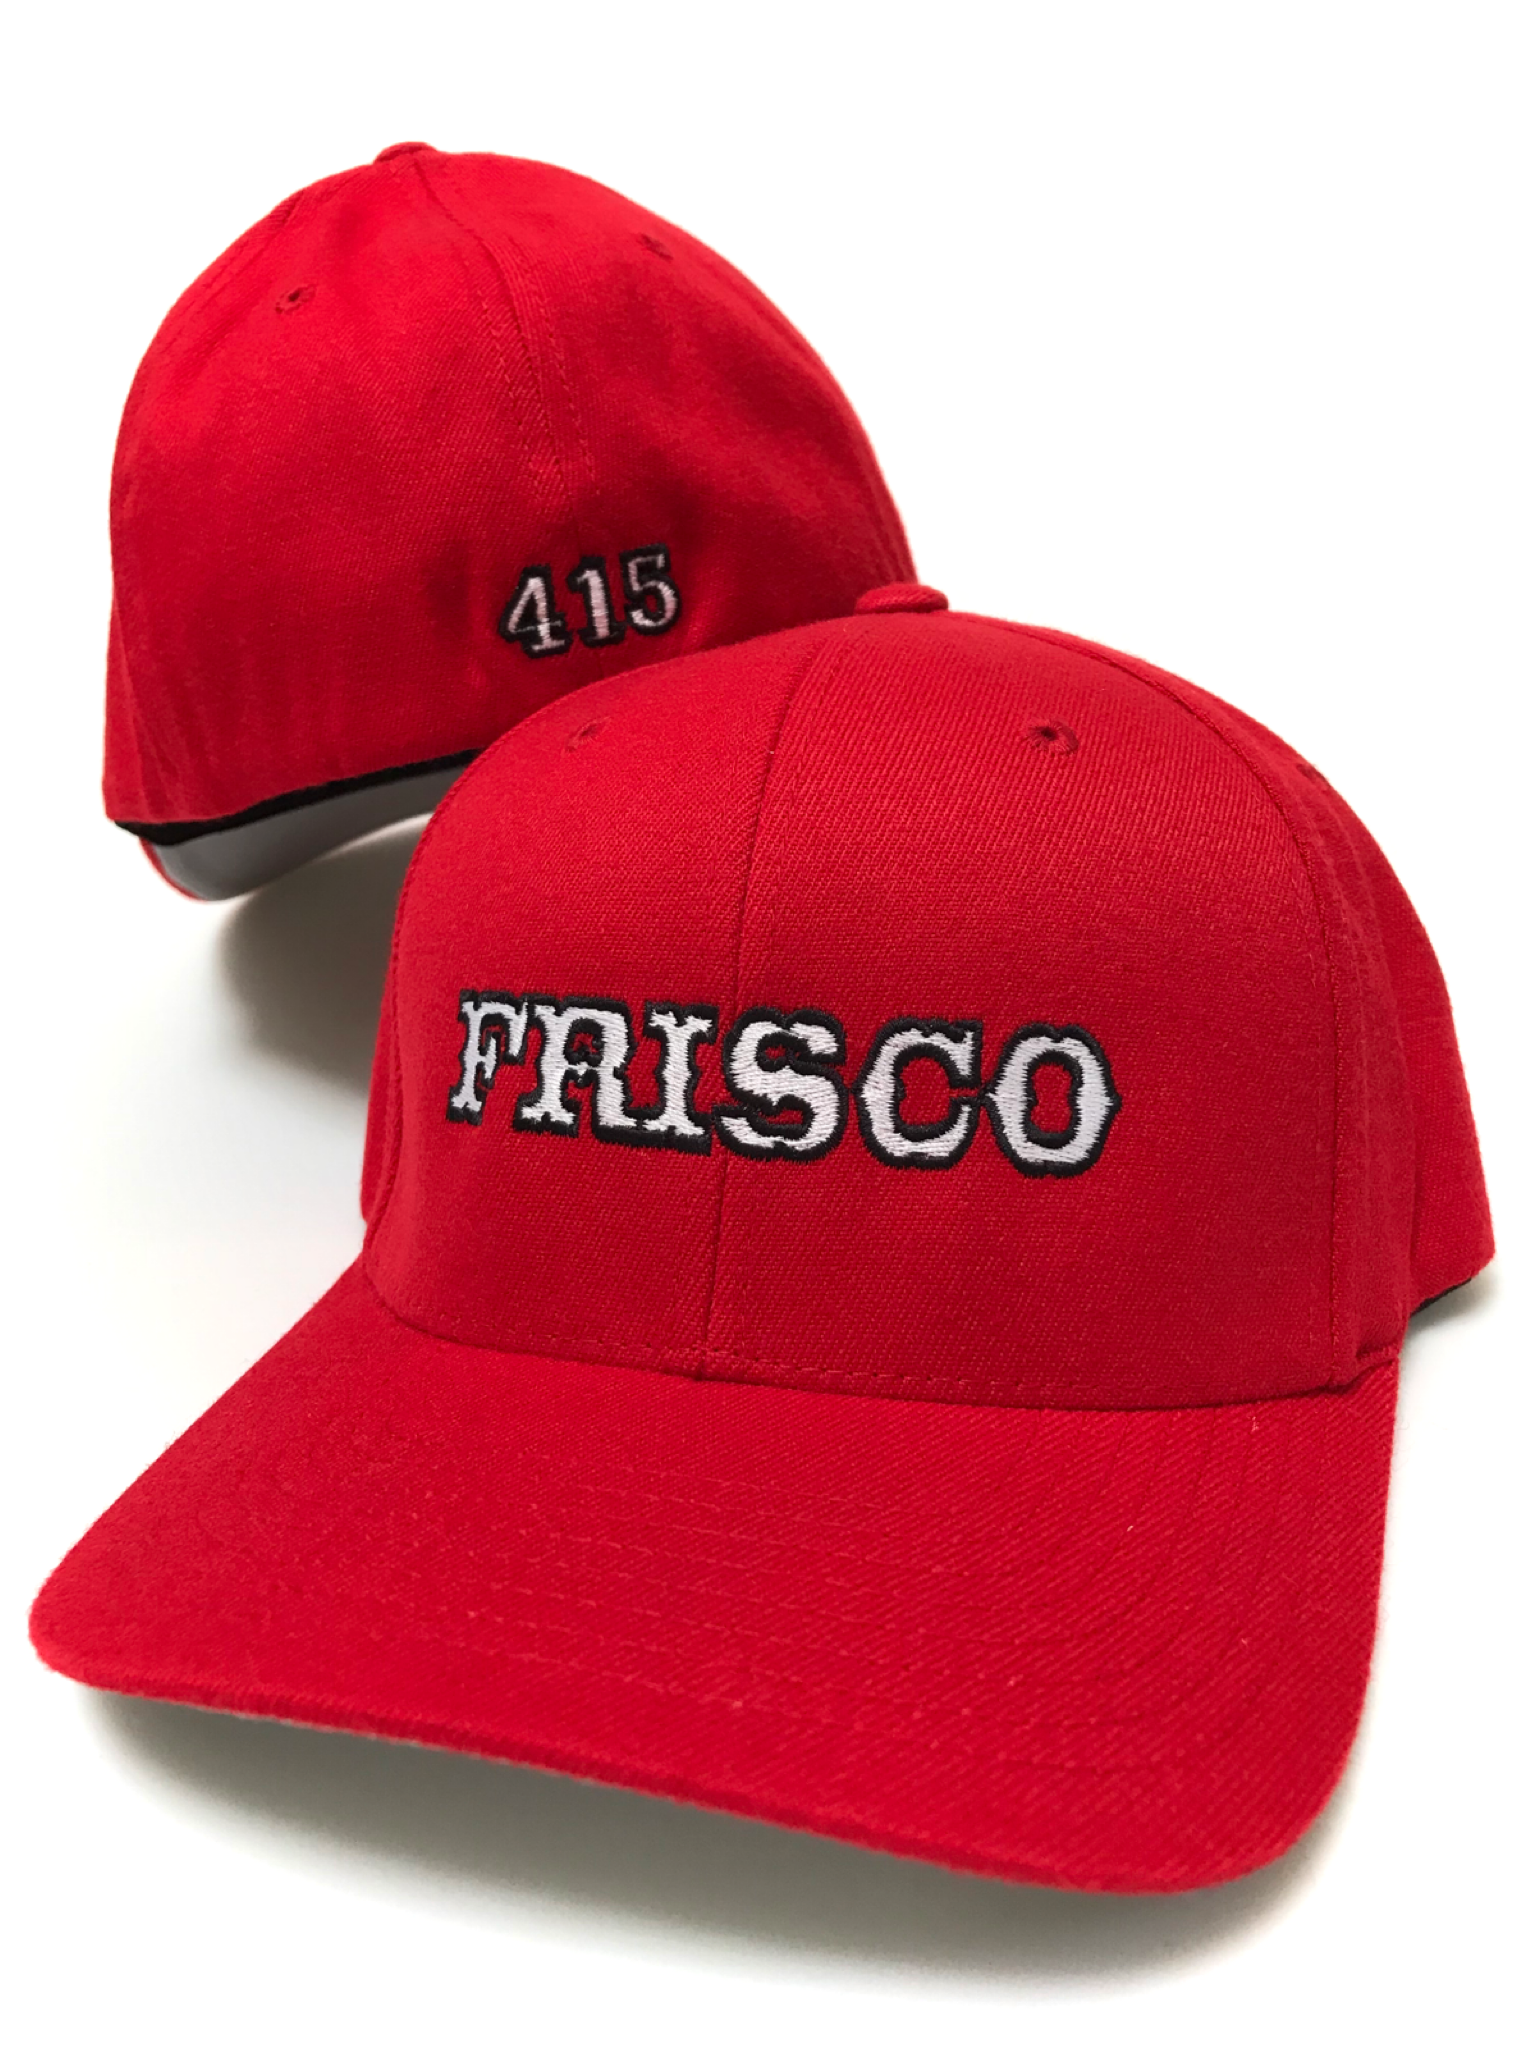 Frisco Flex Fit - 415 Clothing